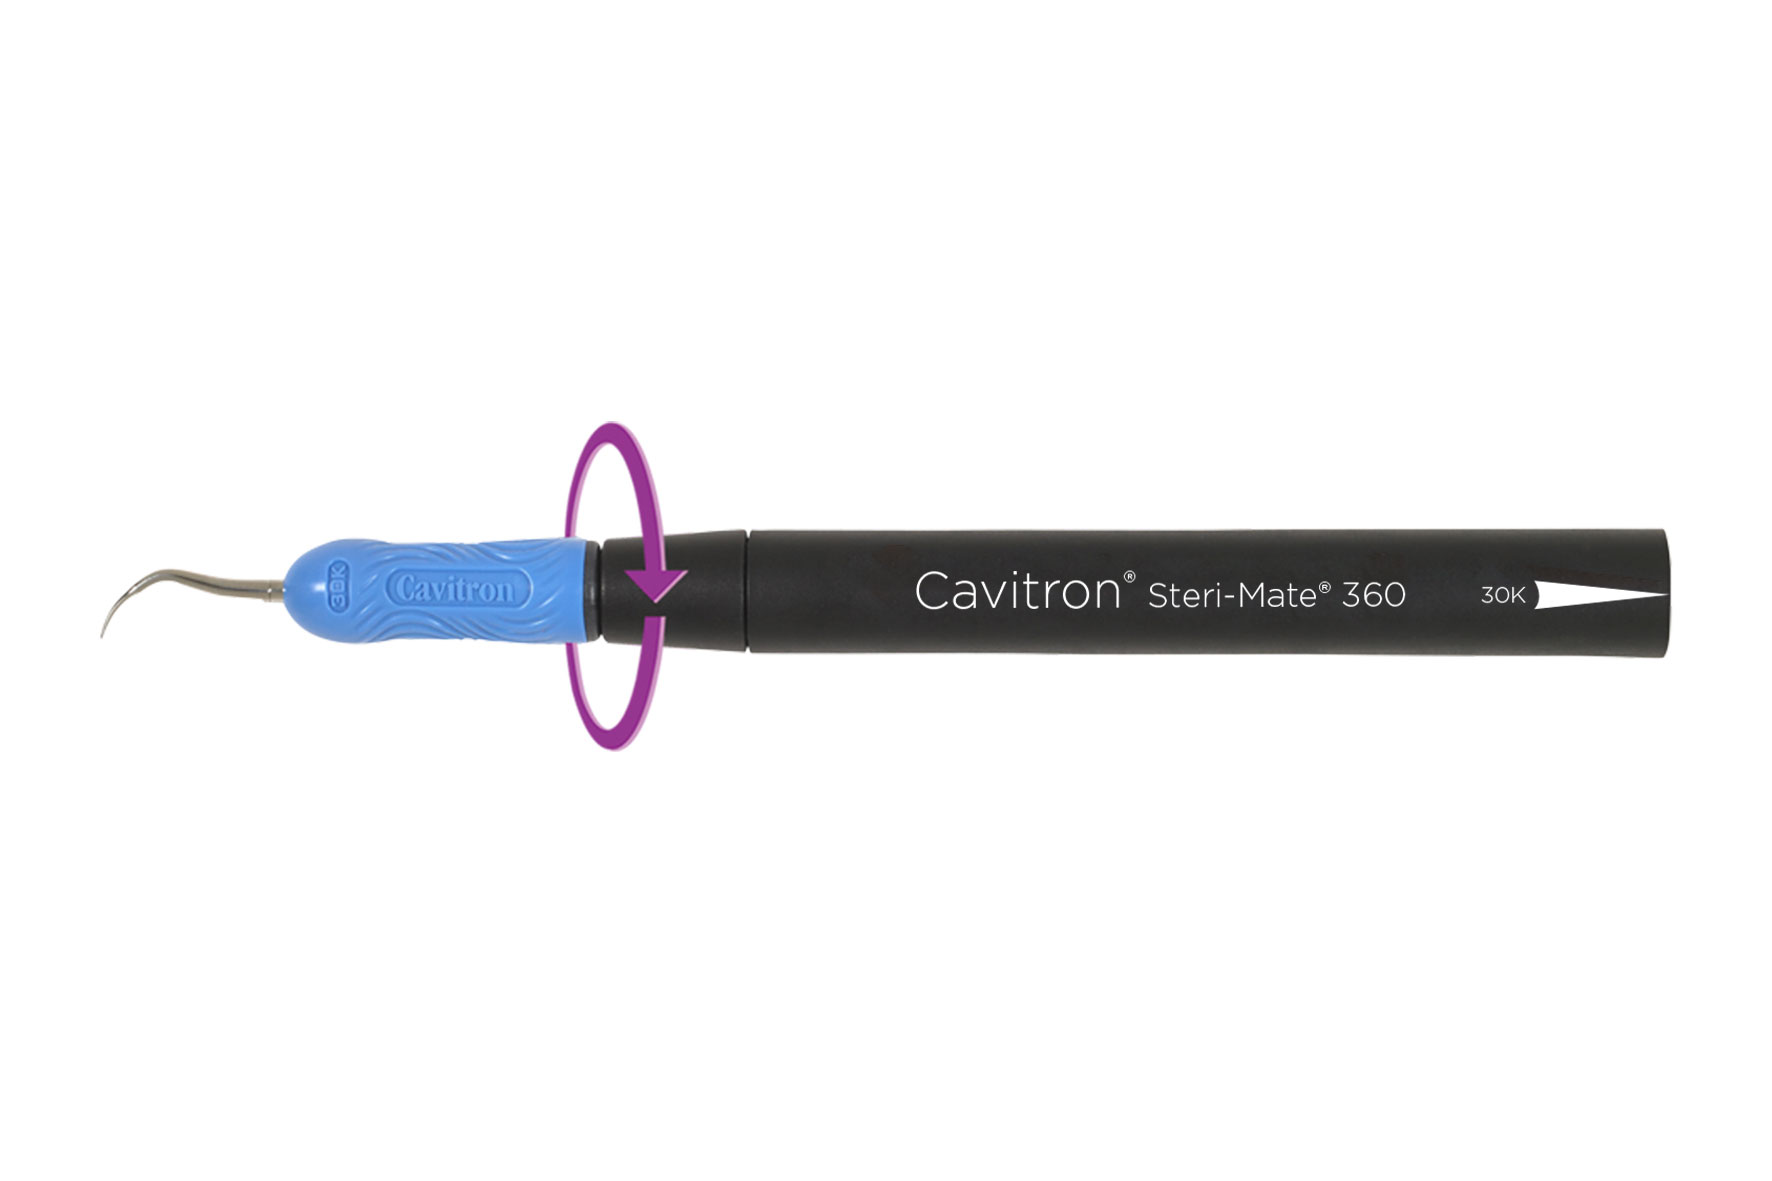 Cavitron Steri-Mate 360 Detachable Sterilizable Handpiece